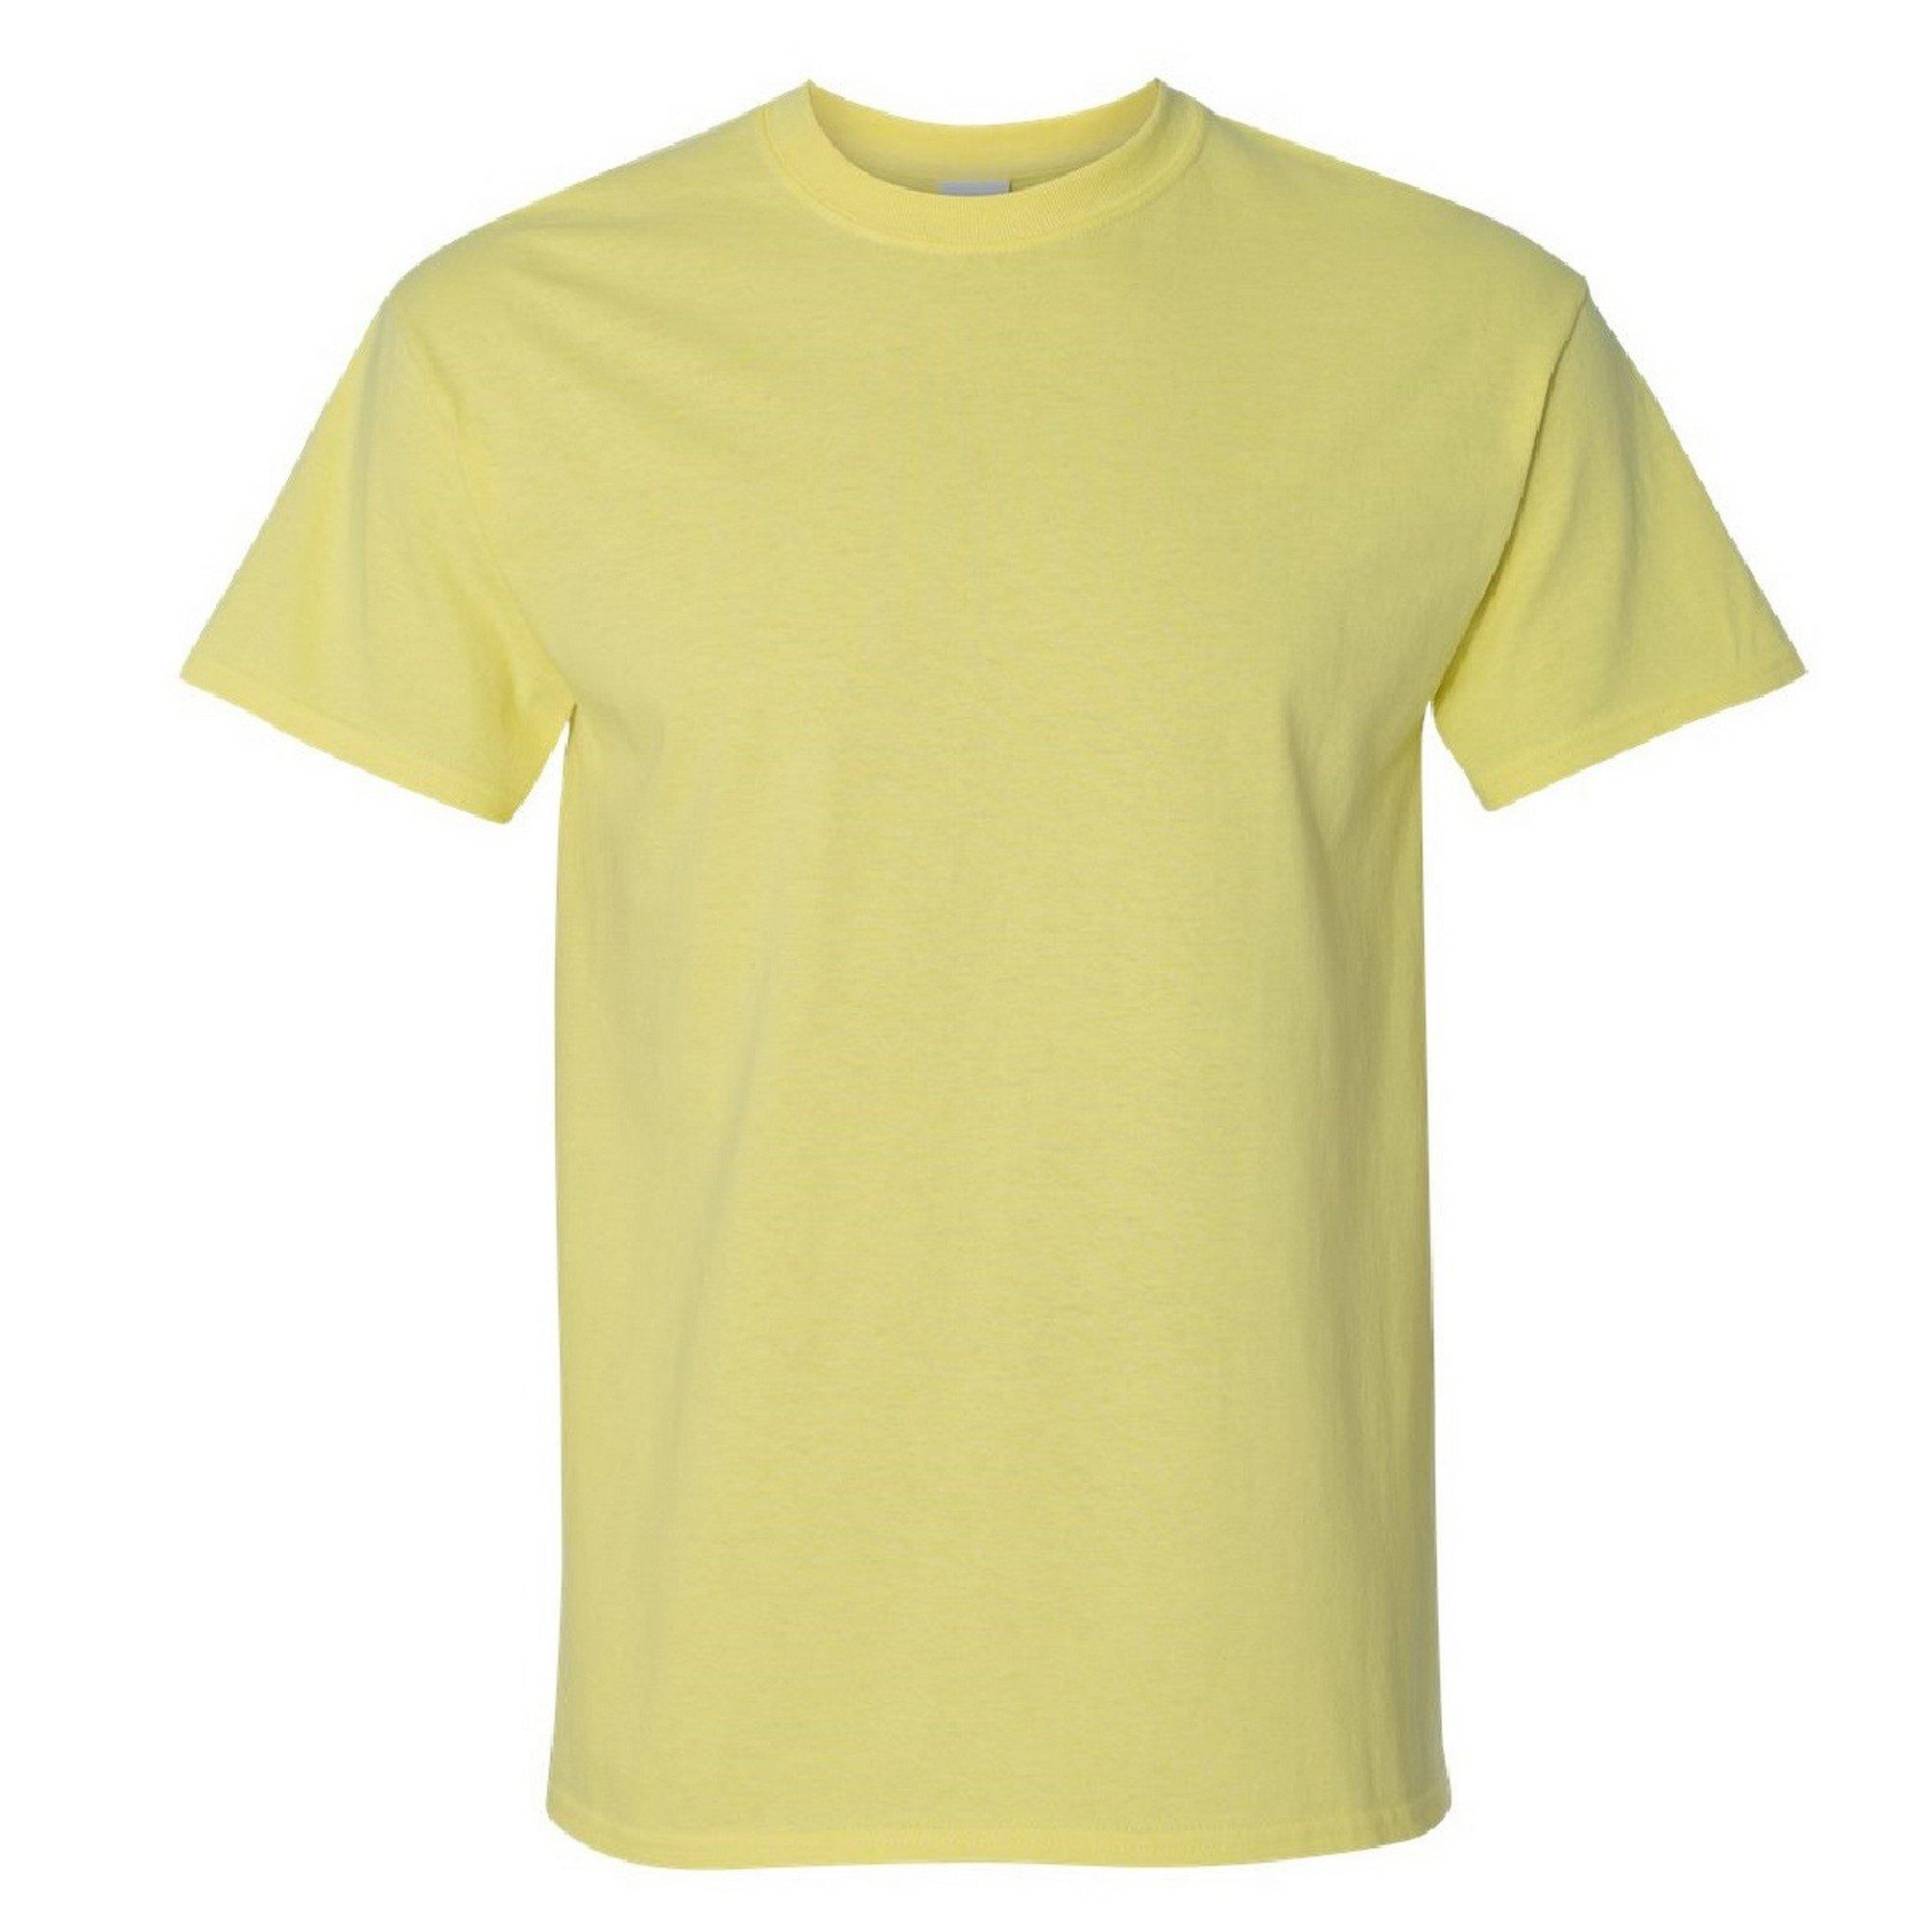 Ultra Tshirt Herren Gelb Bunt XL von Gildan